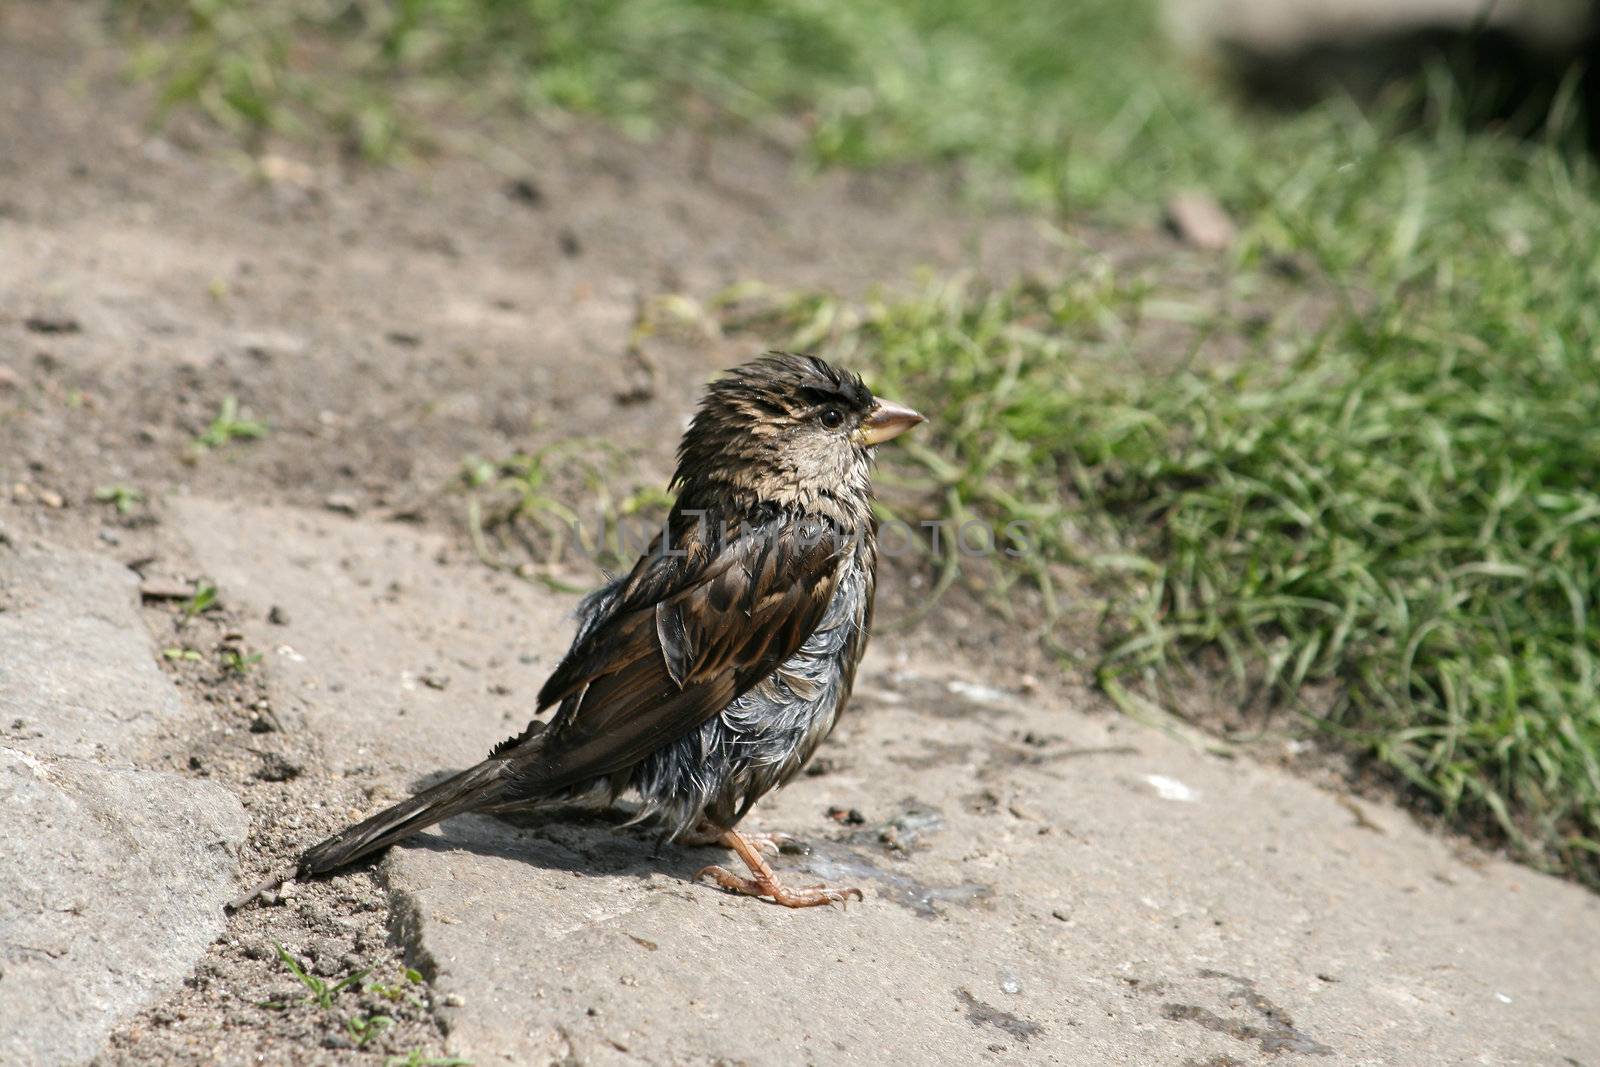 Wet sparrow by miczu